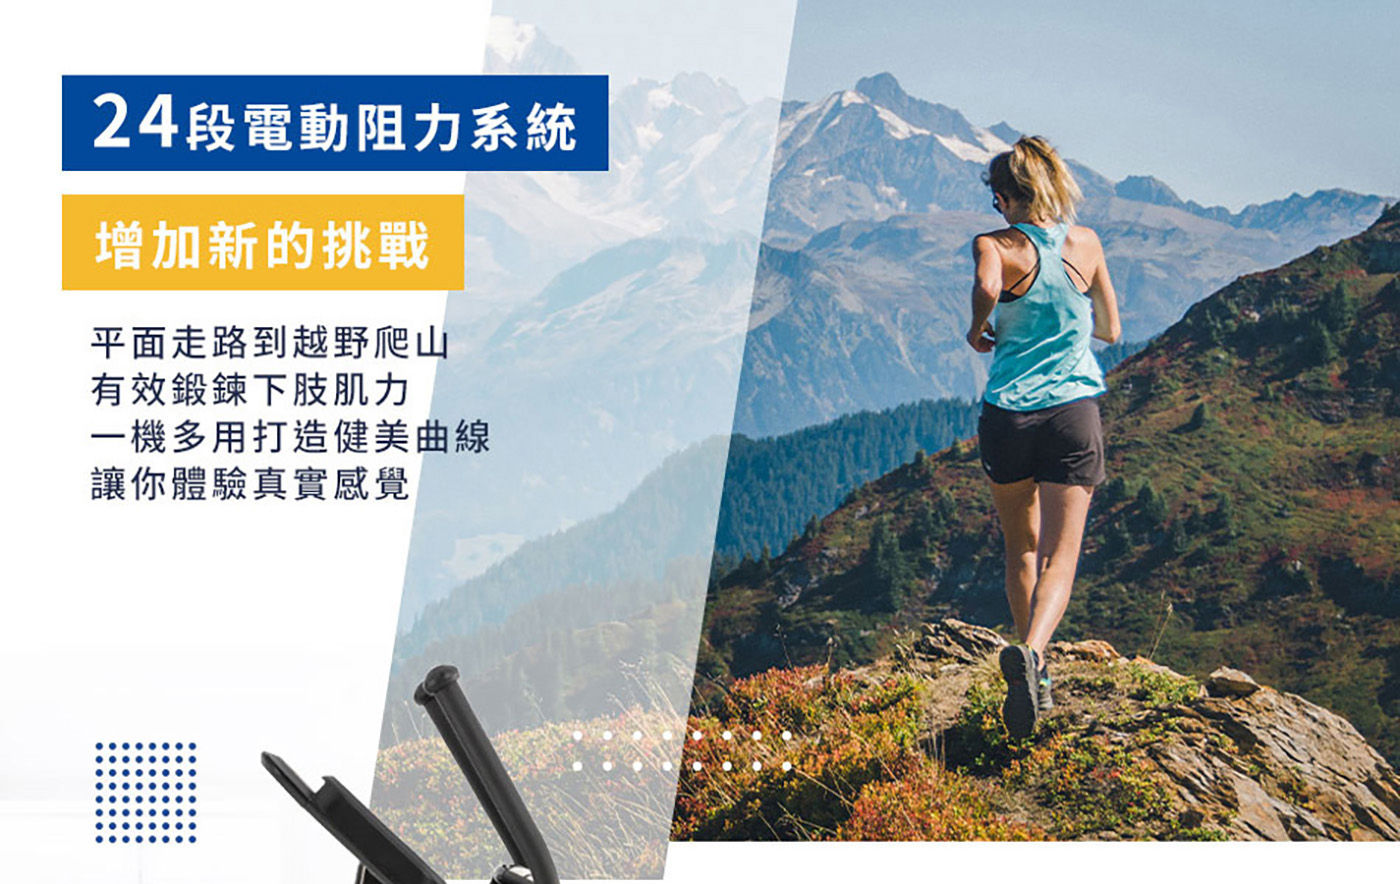 XTERRA FS480 摺疊橢圓機24段電動阻力系統增加新的挑戰平面走路到越野爬山有效鍛鍊下肢肌力一機多用打造健美曲線